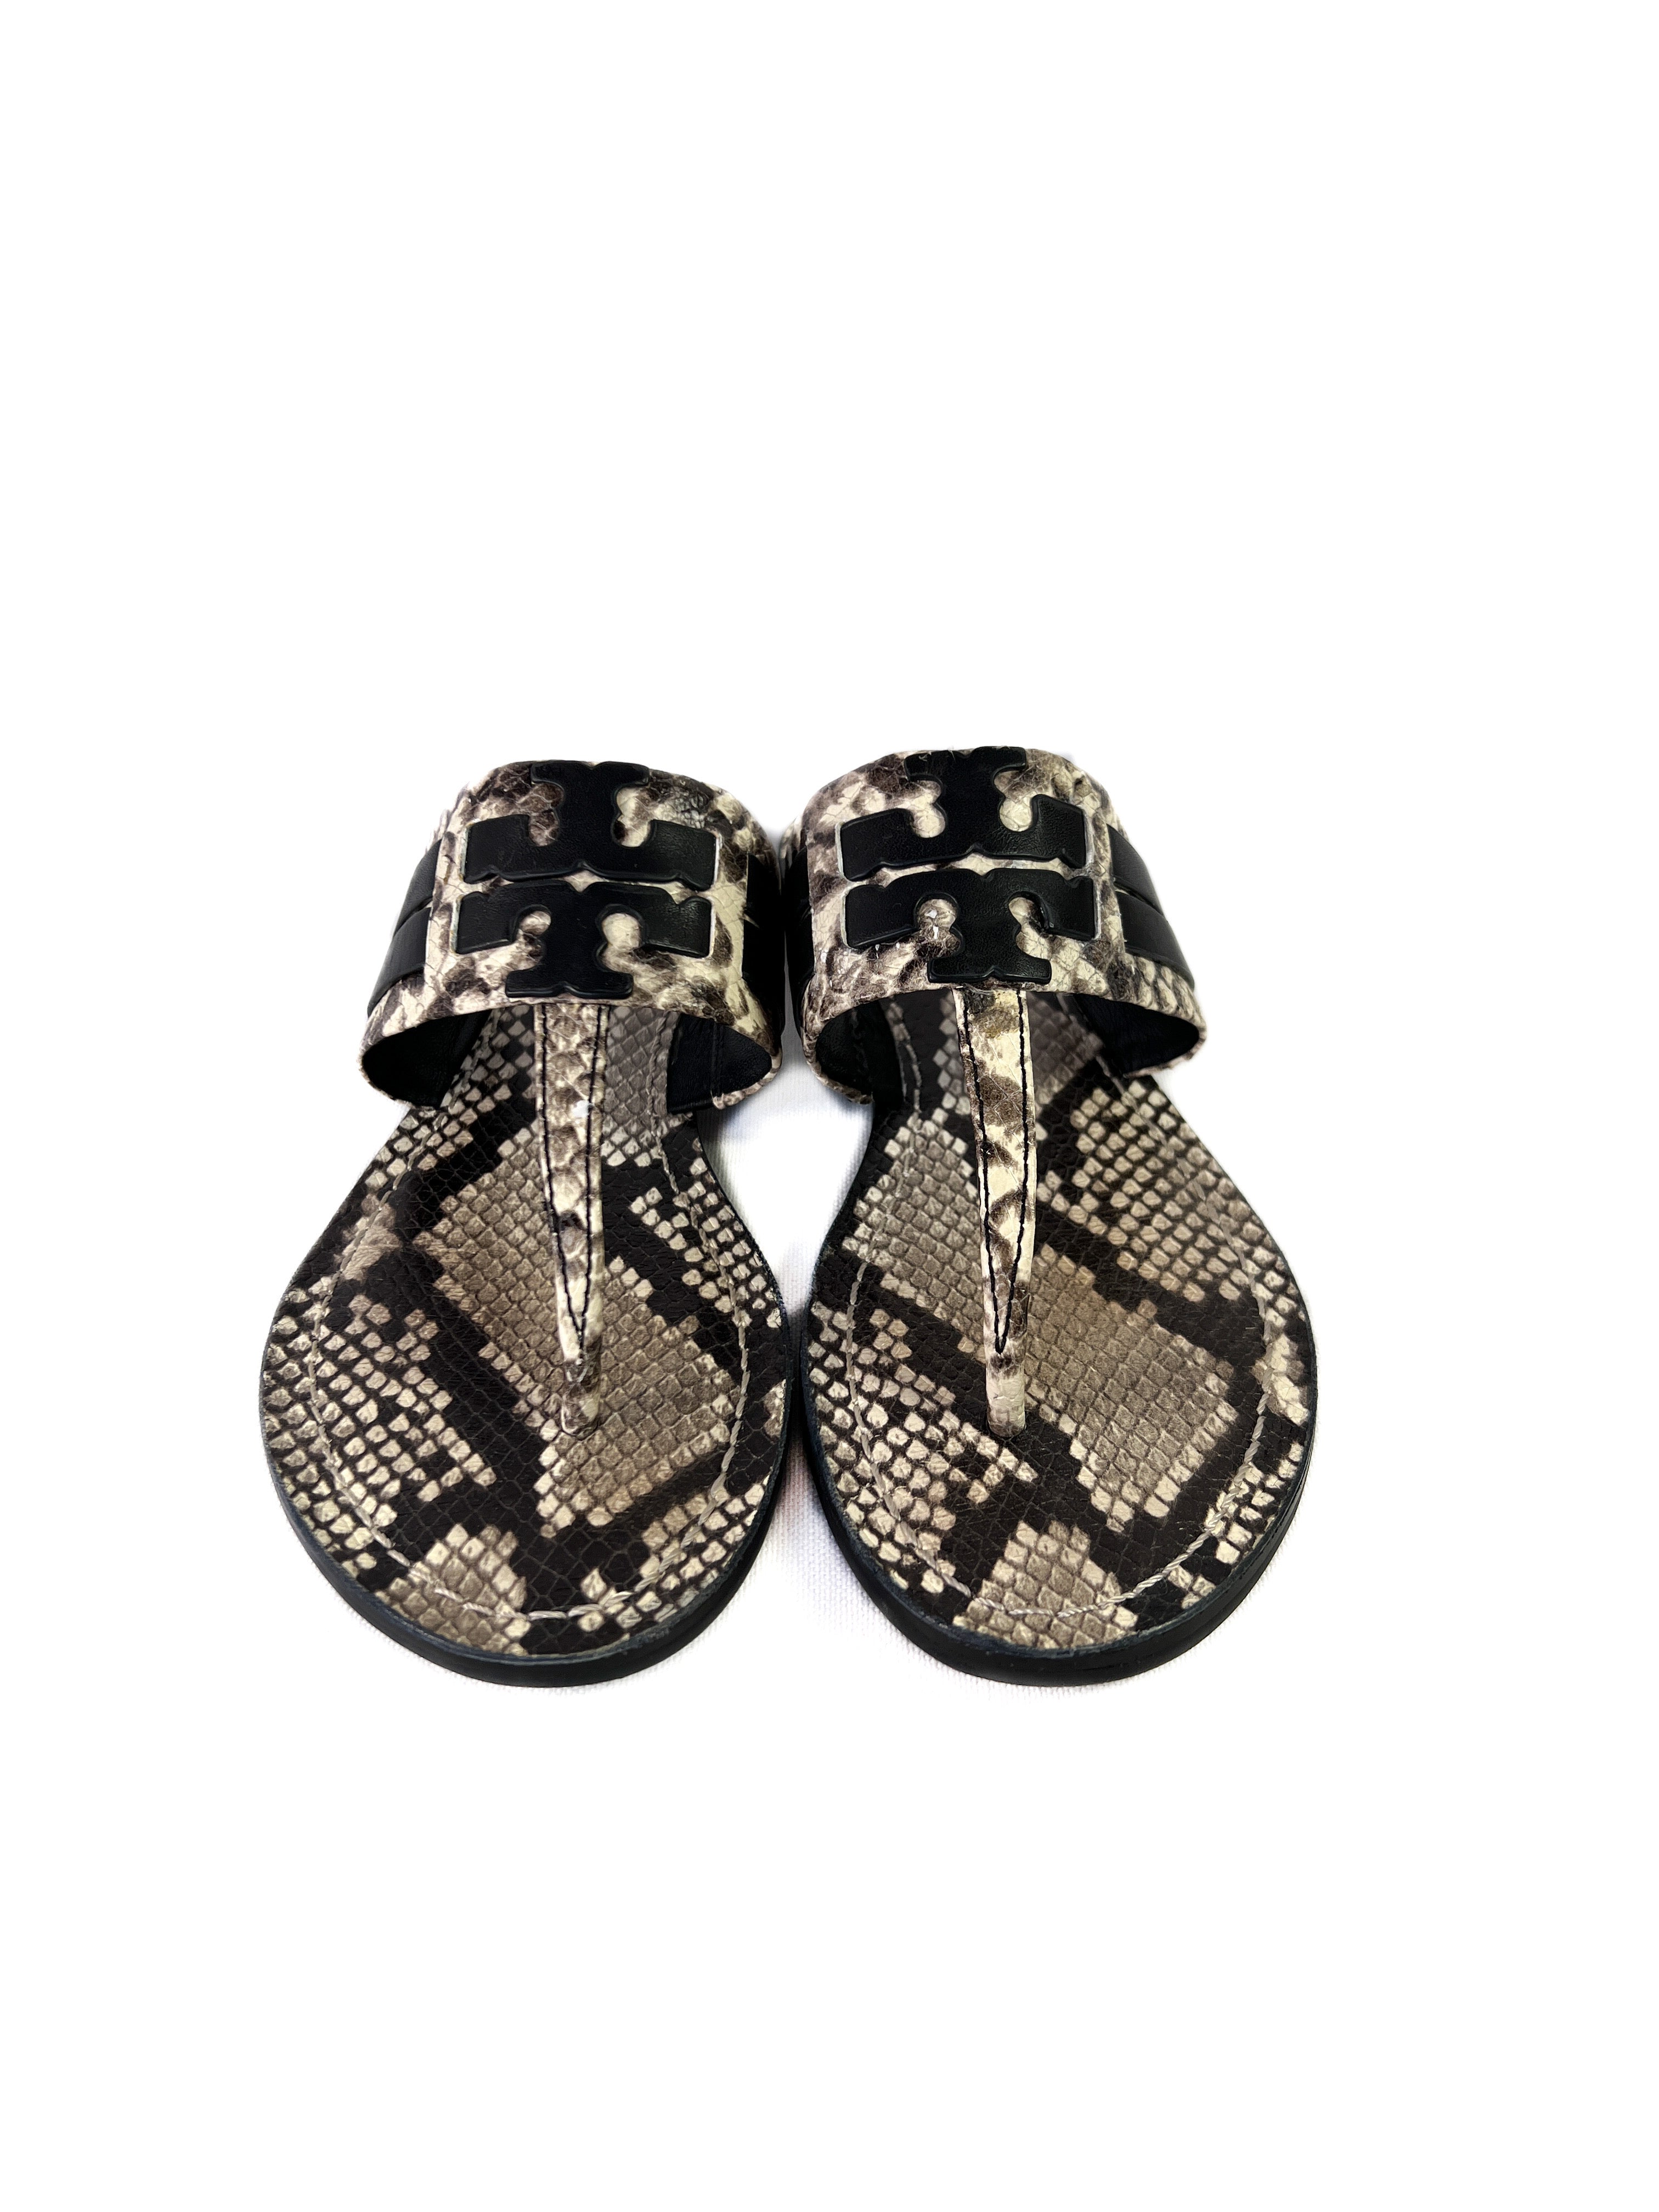 Tory Burch snake print Leigh sandal size 7 – My Girlfriend's Wardrobe LLC